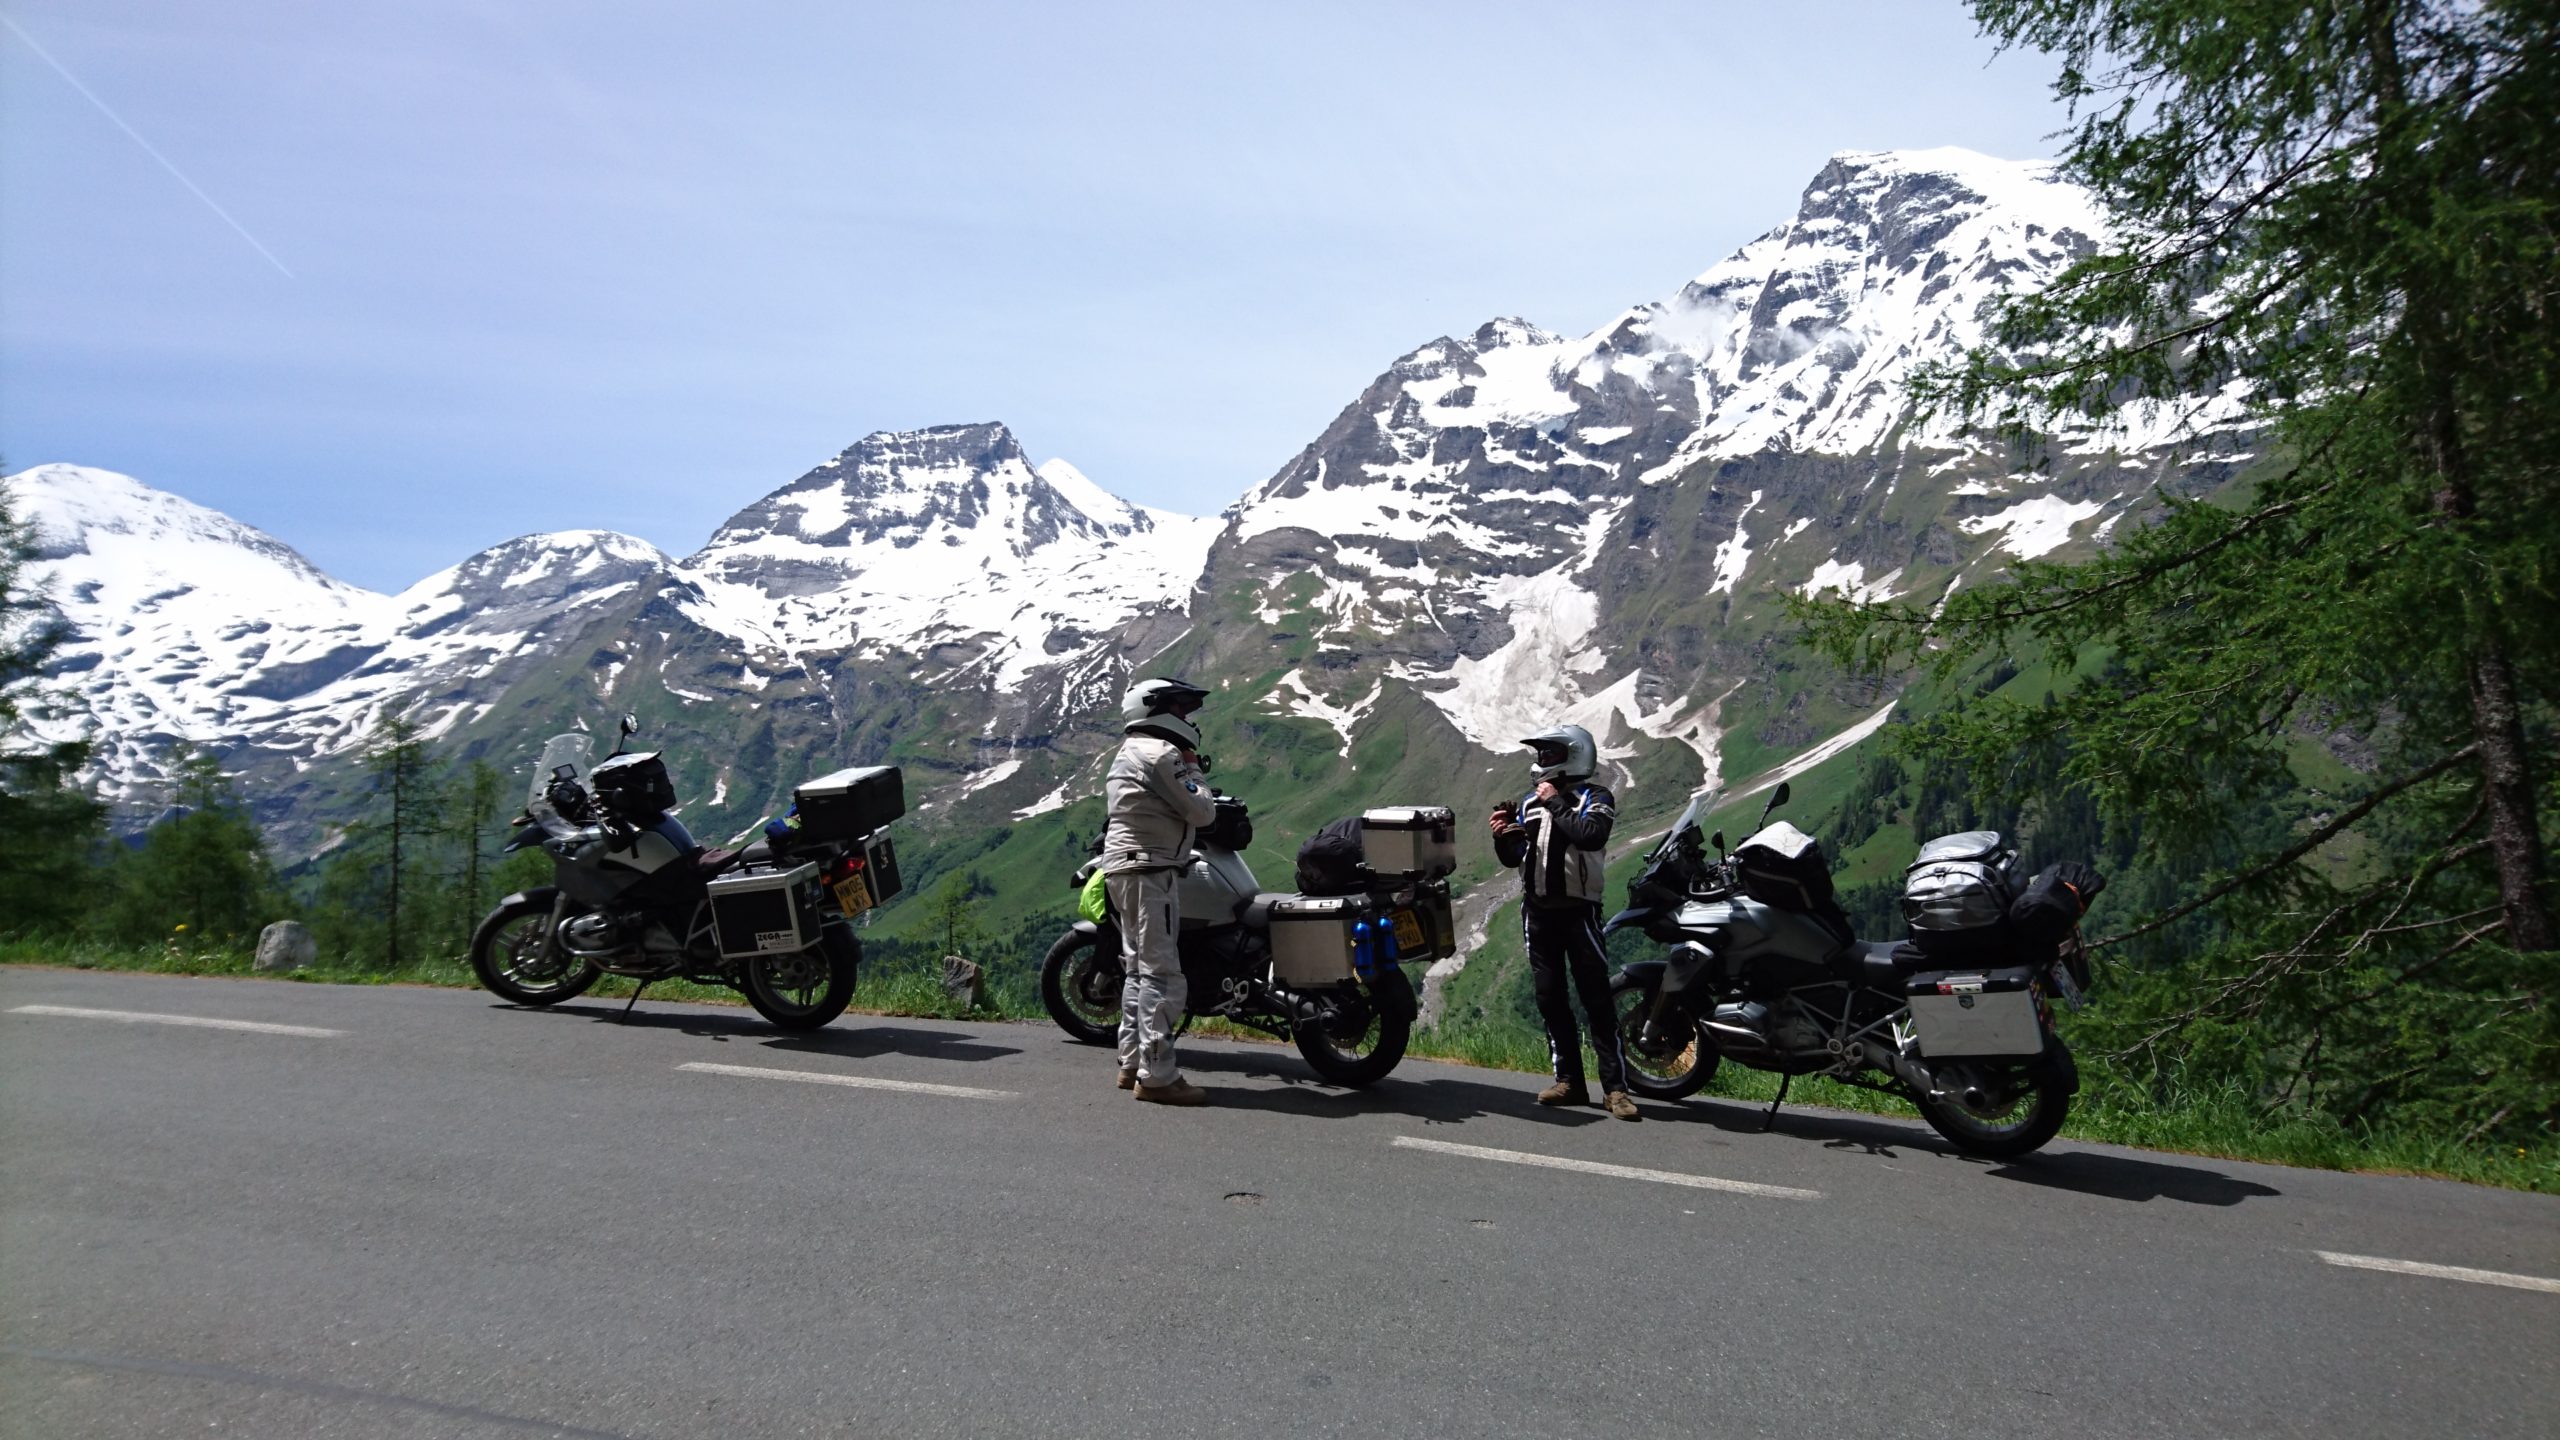 European motorcycle tour Austria Grossglockner Pass - 20 Countries in 20 Days